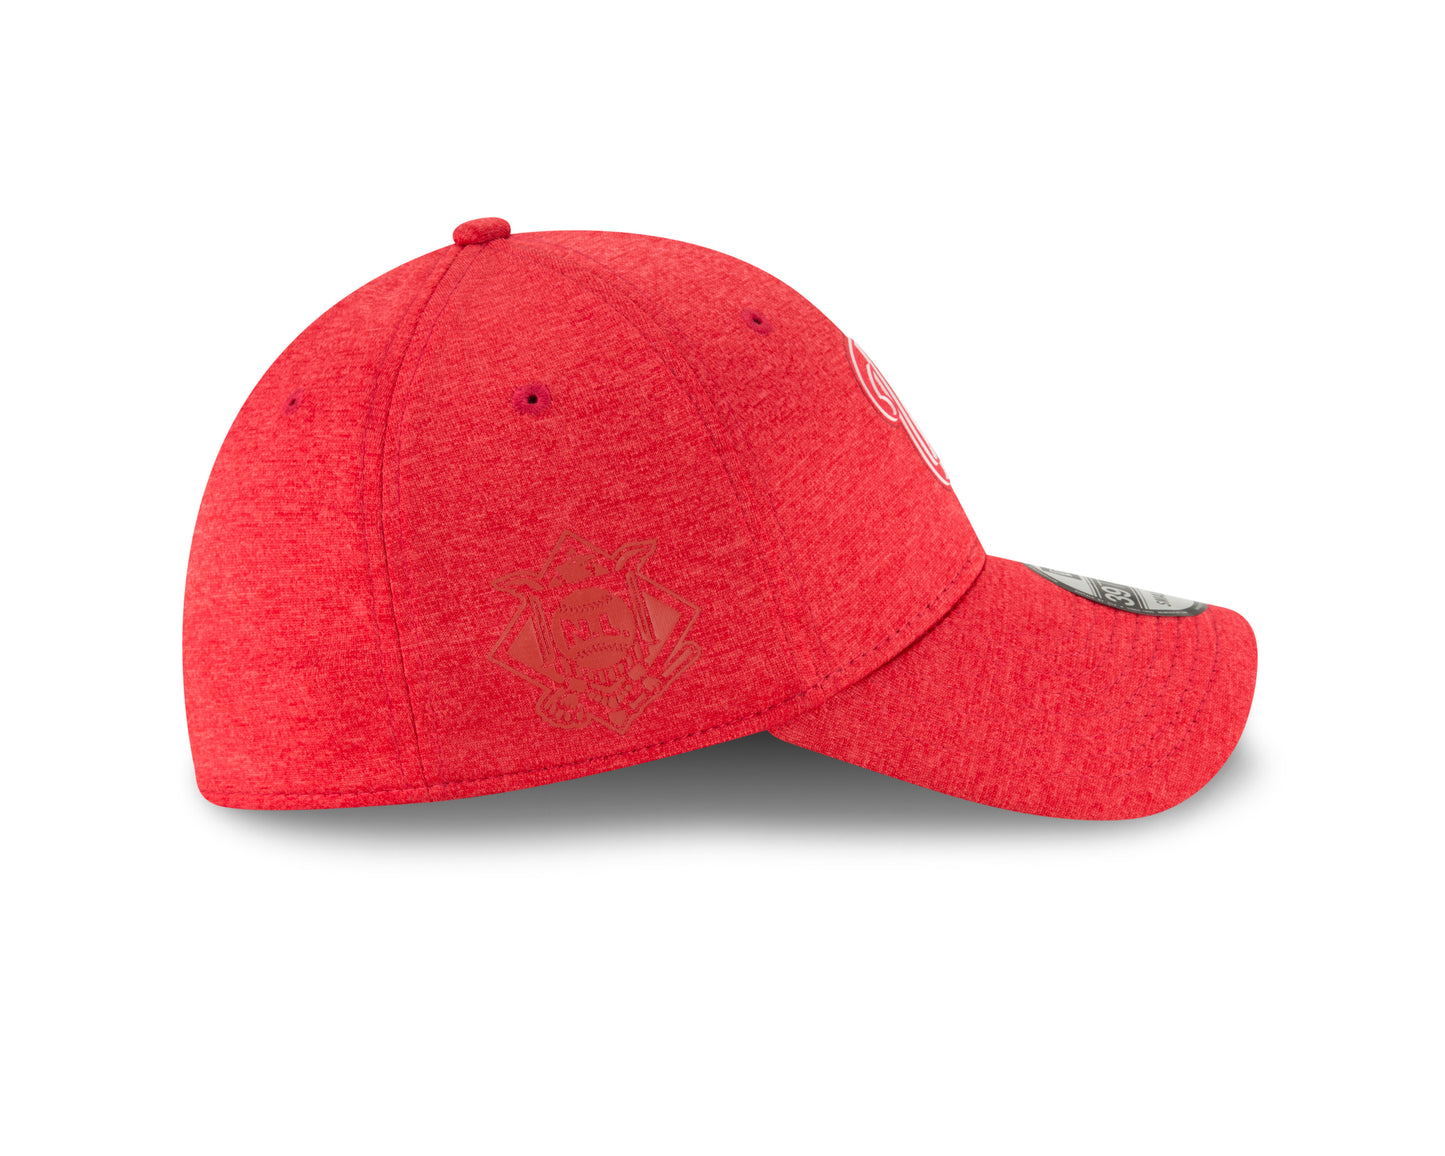 Washington Nationals New Era Clubhouse 39THIRTY Flex Hat - Heathered Red